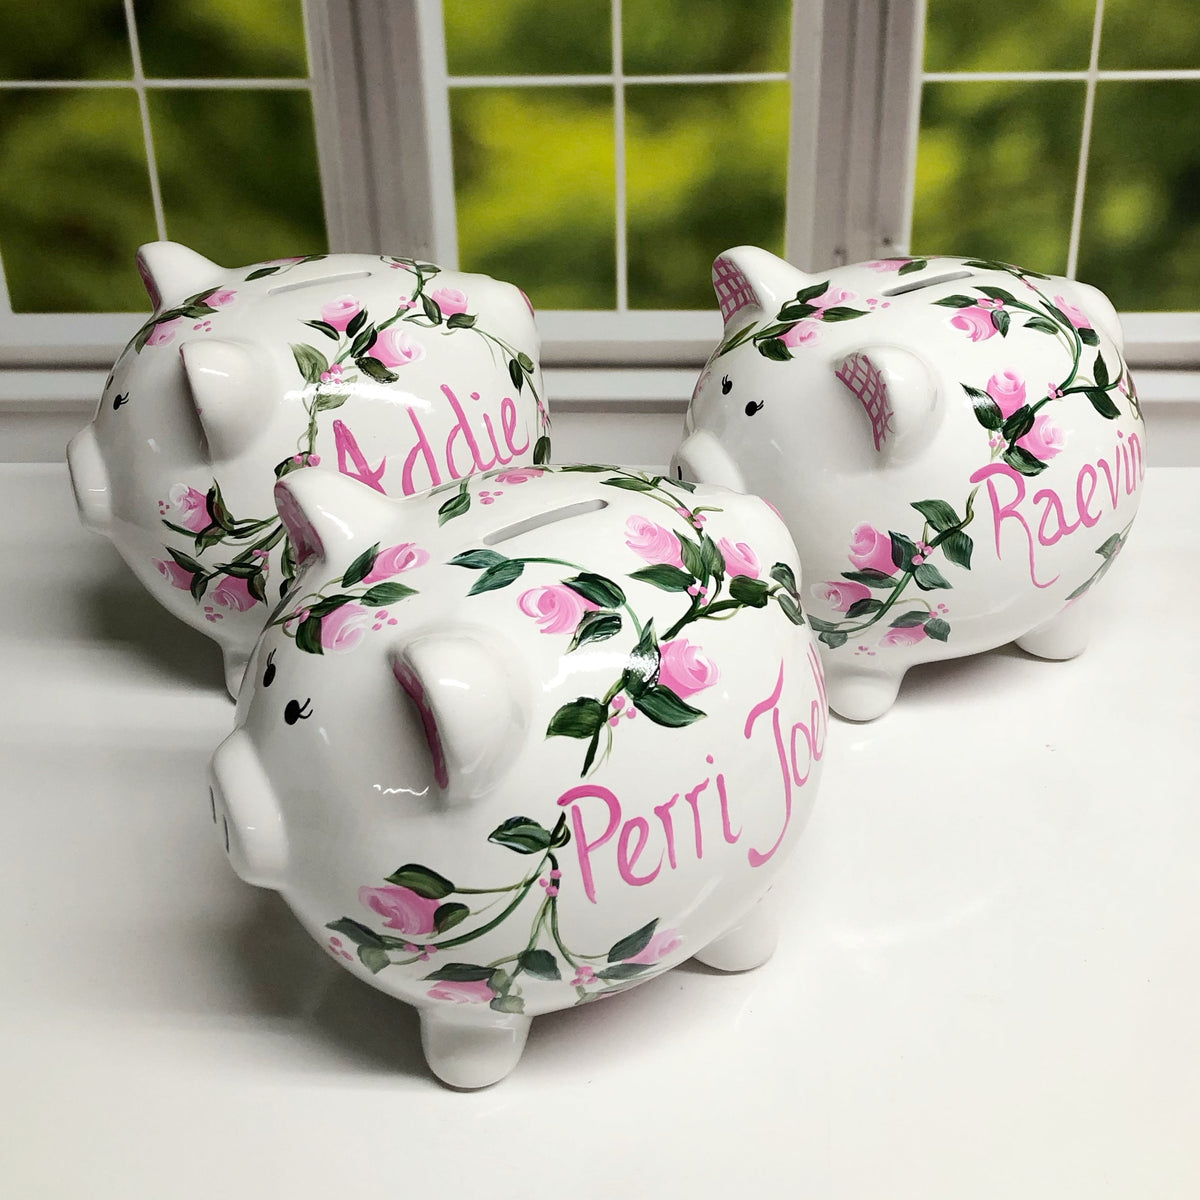 Personalized Pink Rosebud Piggy Bank